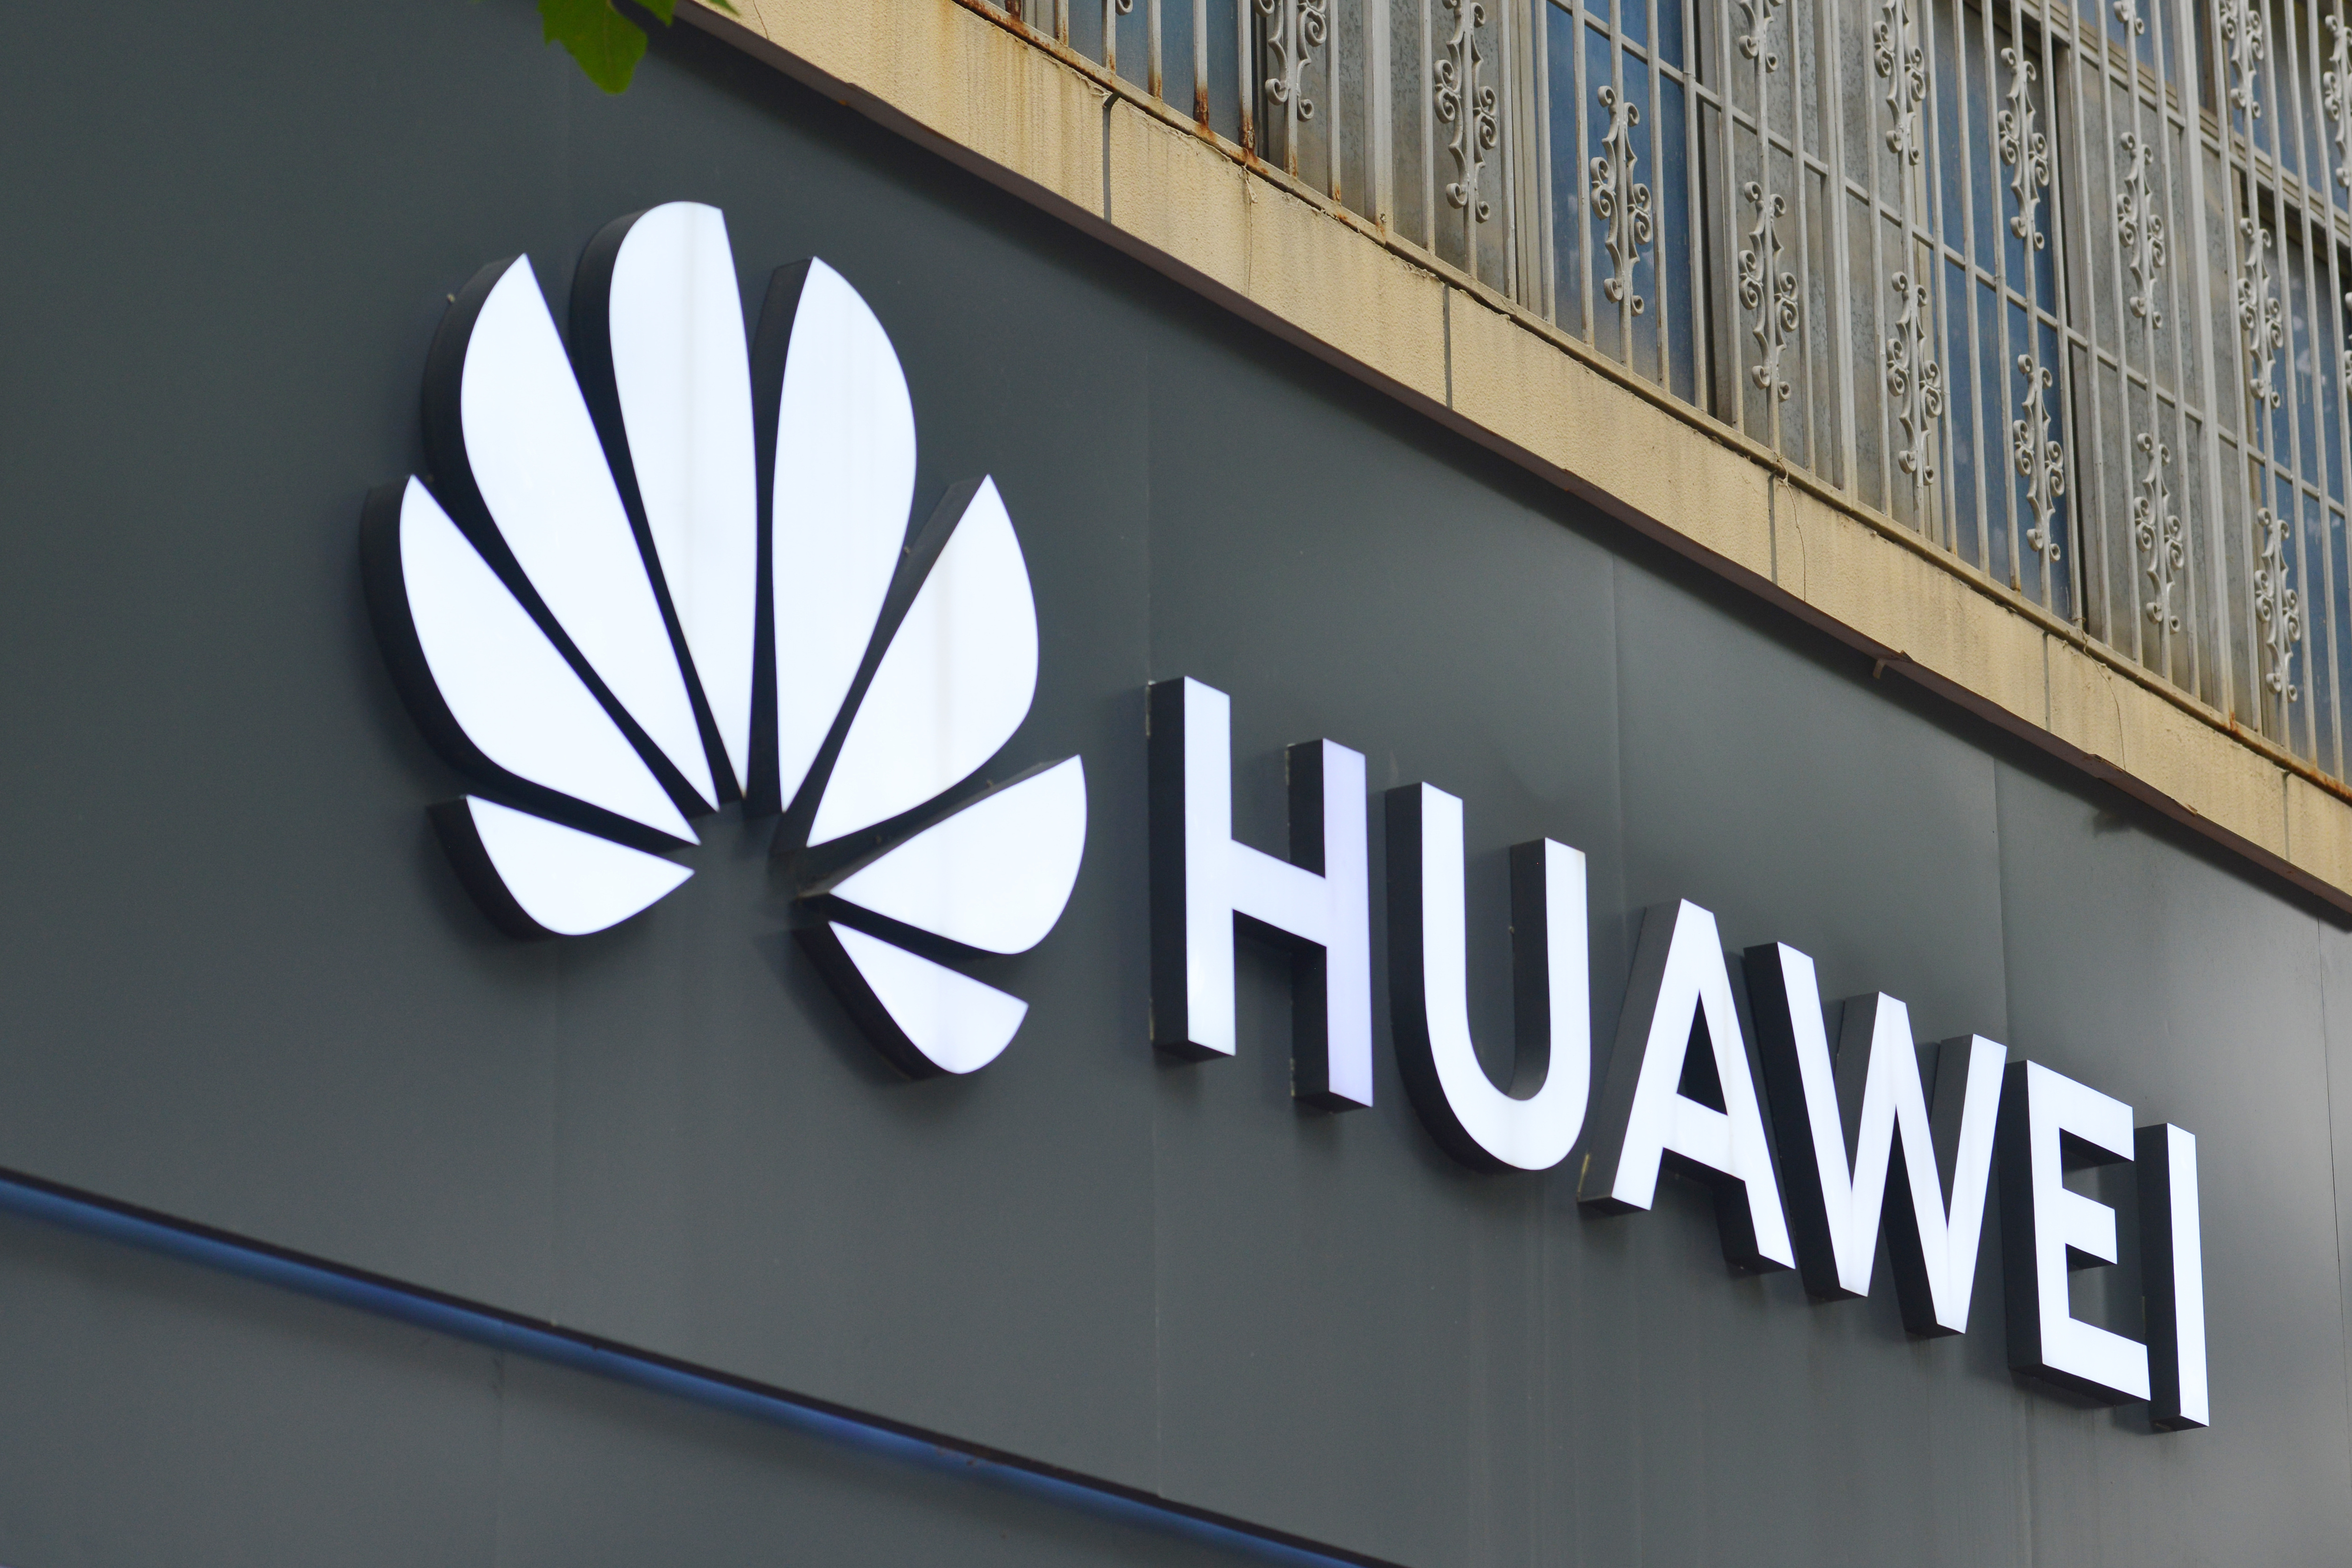 UK bans installation of Huawei 5G equipment starting September 2021